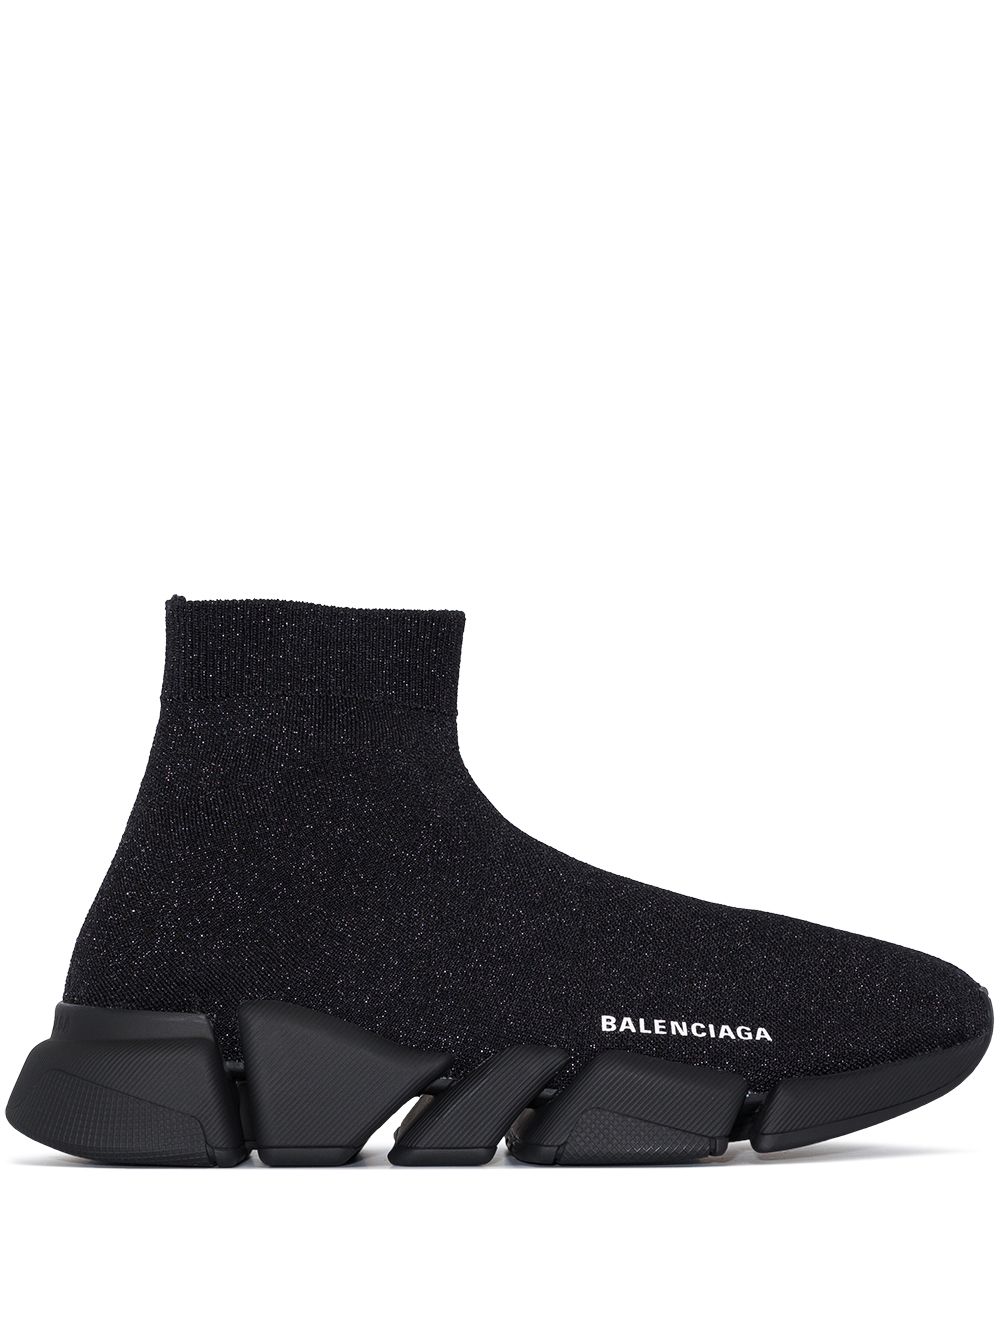 Balenciaga Speed.2 LT Knit Sole Sock-Sneakers - Schwarz von Balenciaga